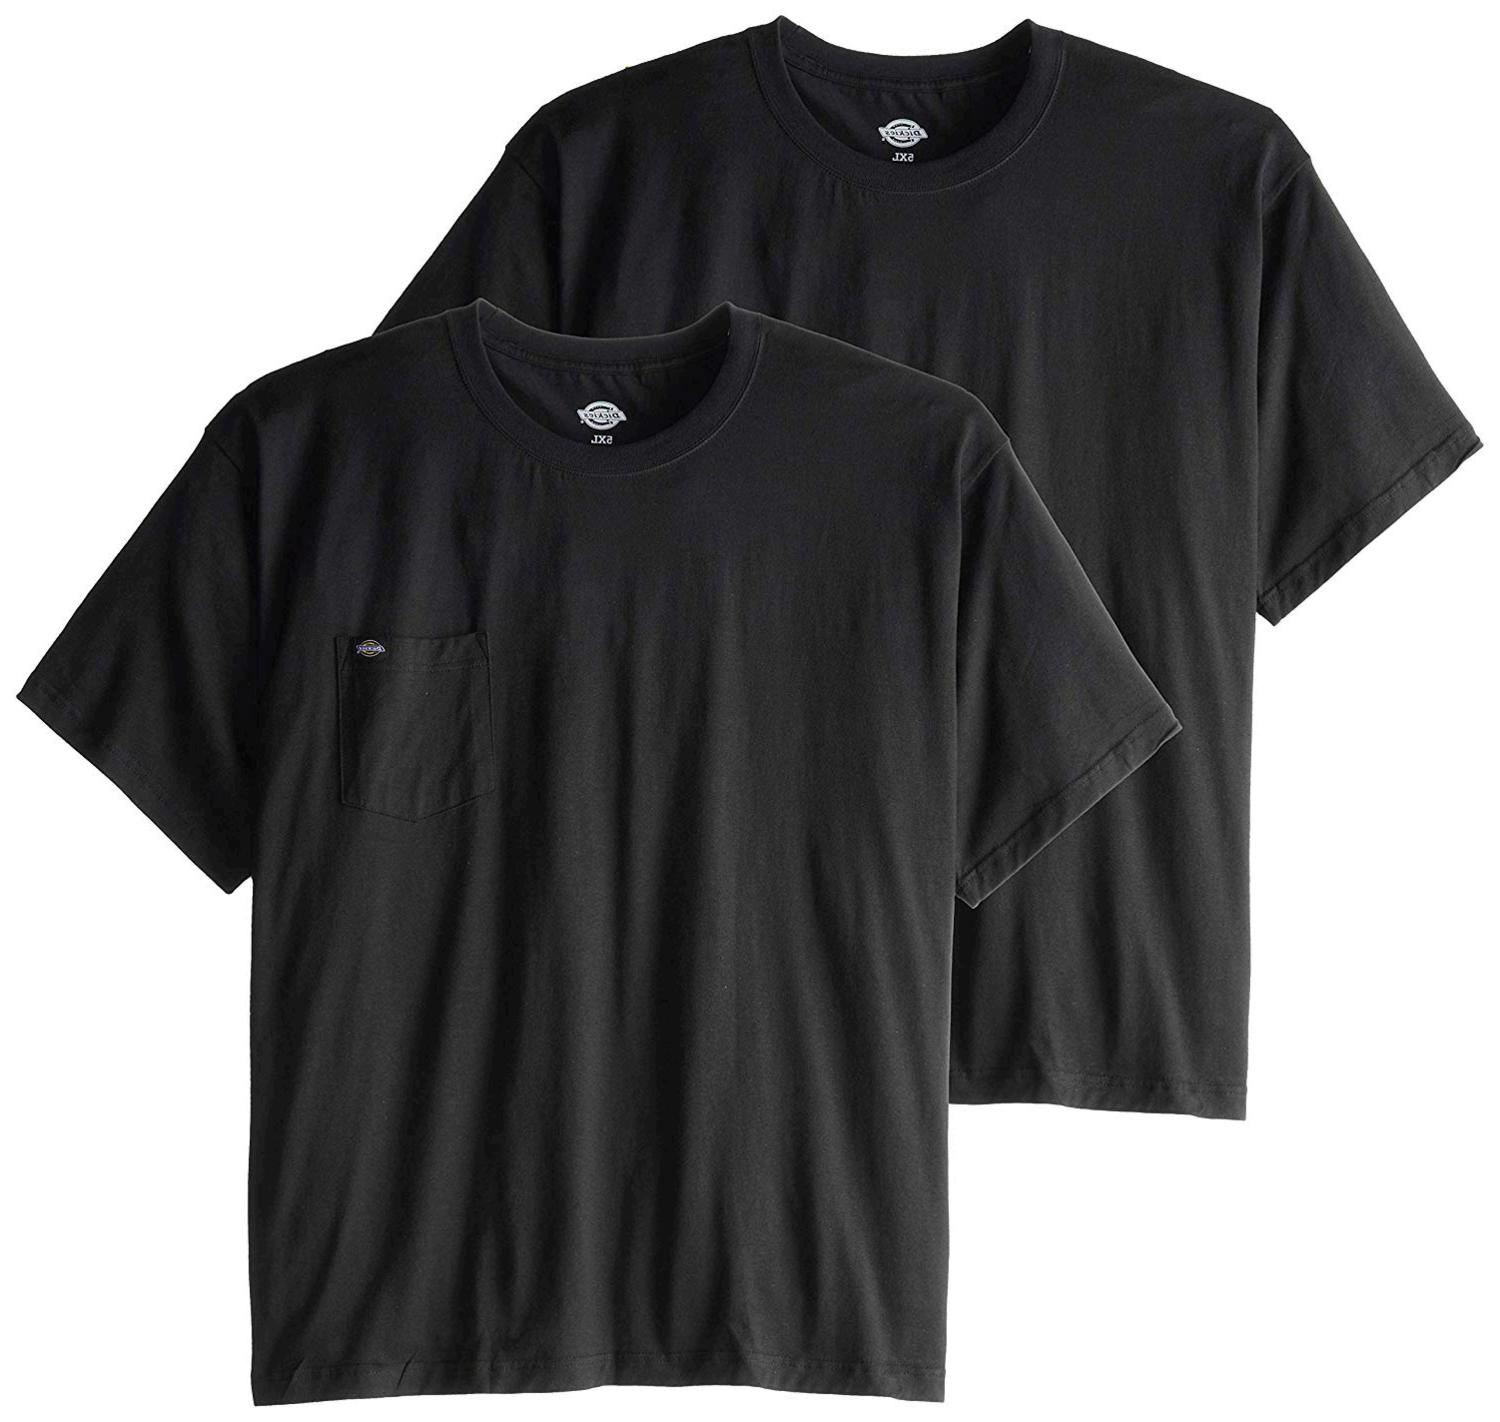 2PK LG BLK Pock TShirt, Black, Size 16.0 jMzs | eBay